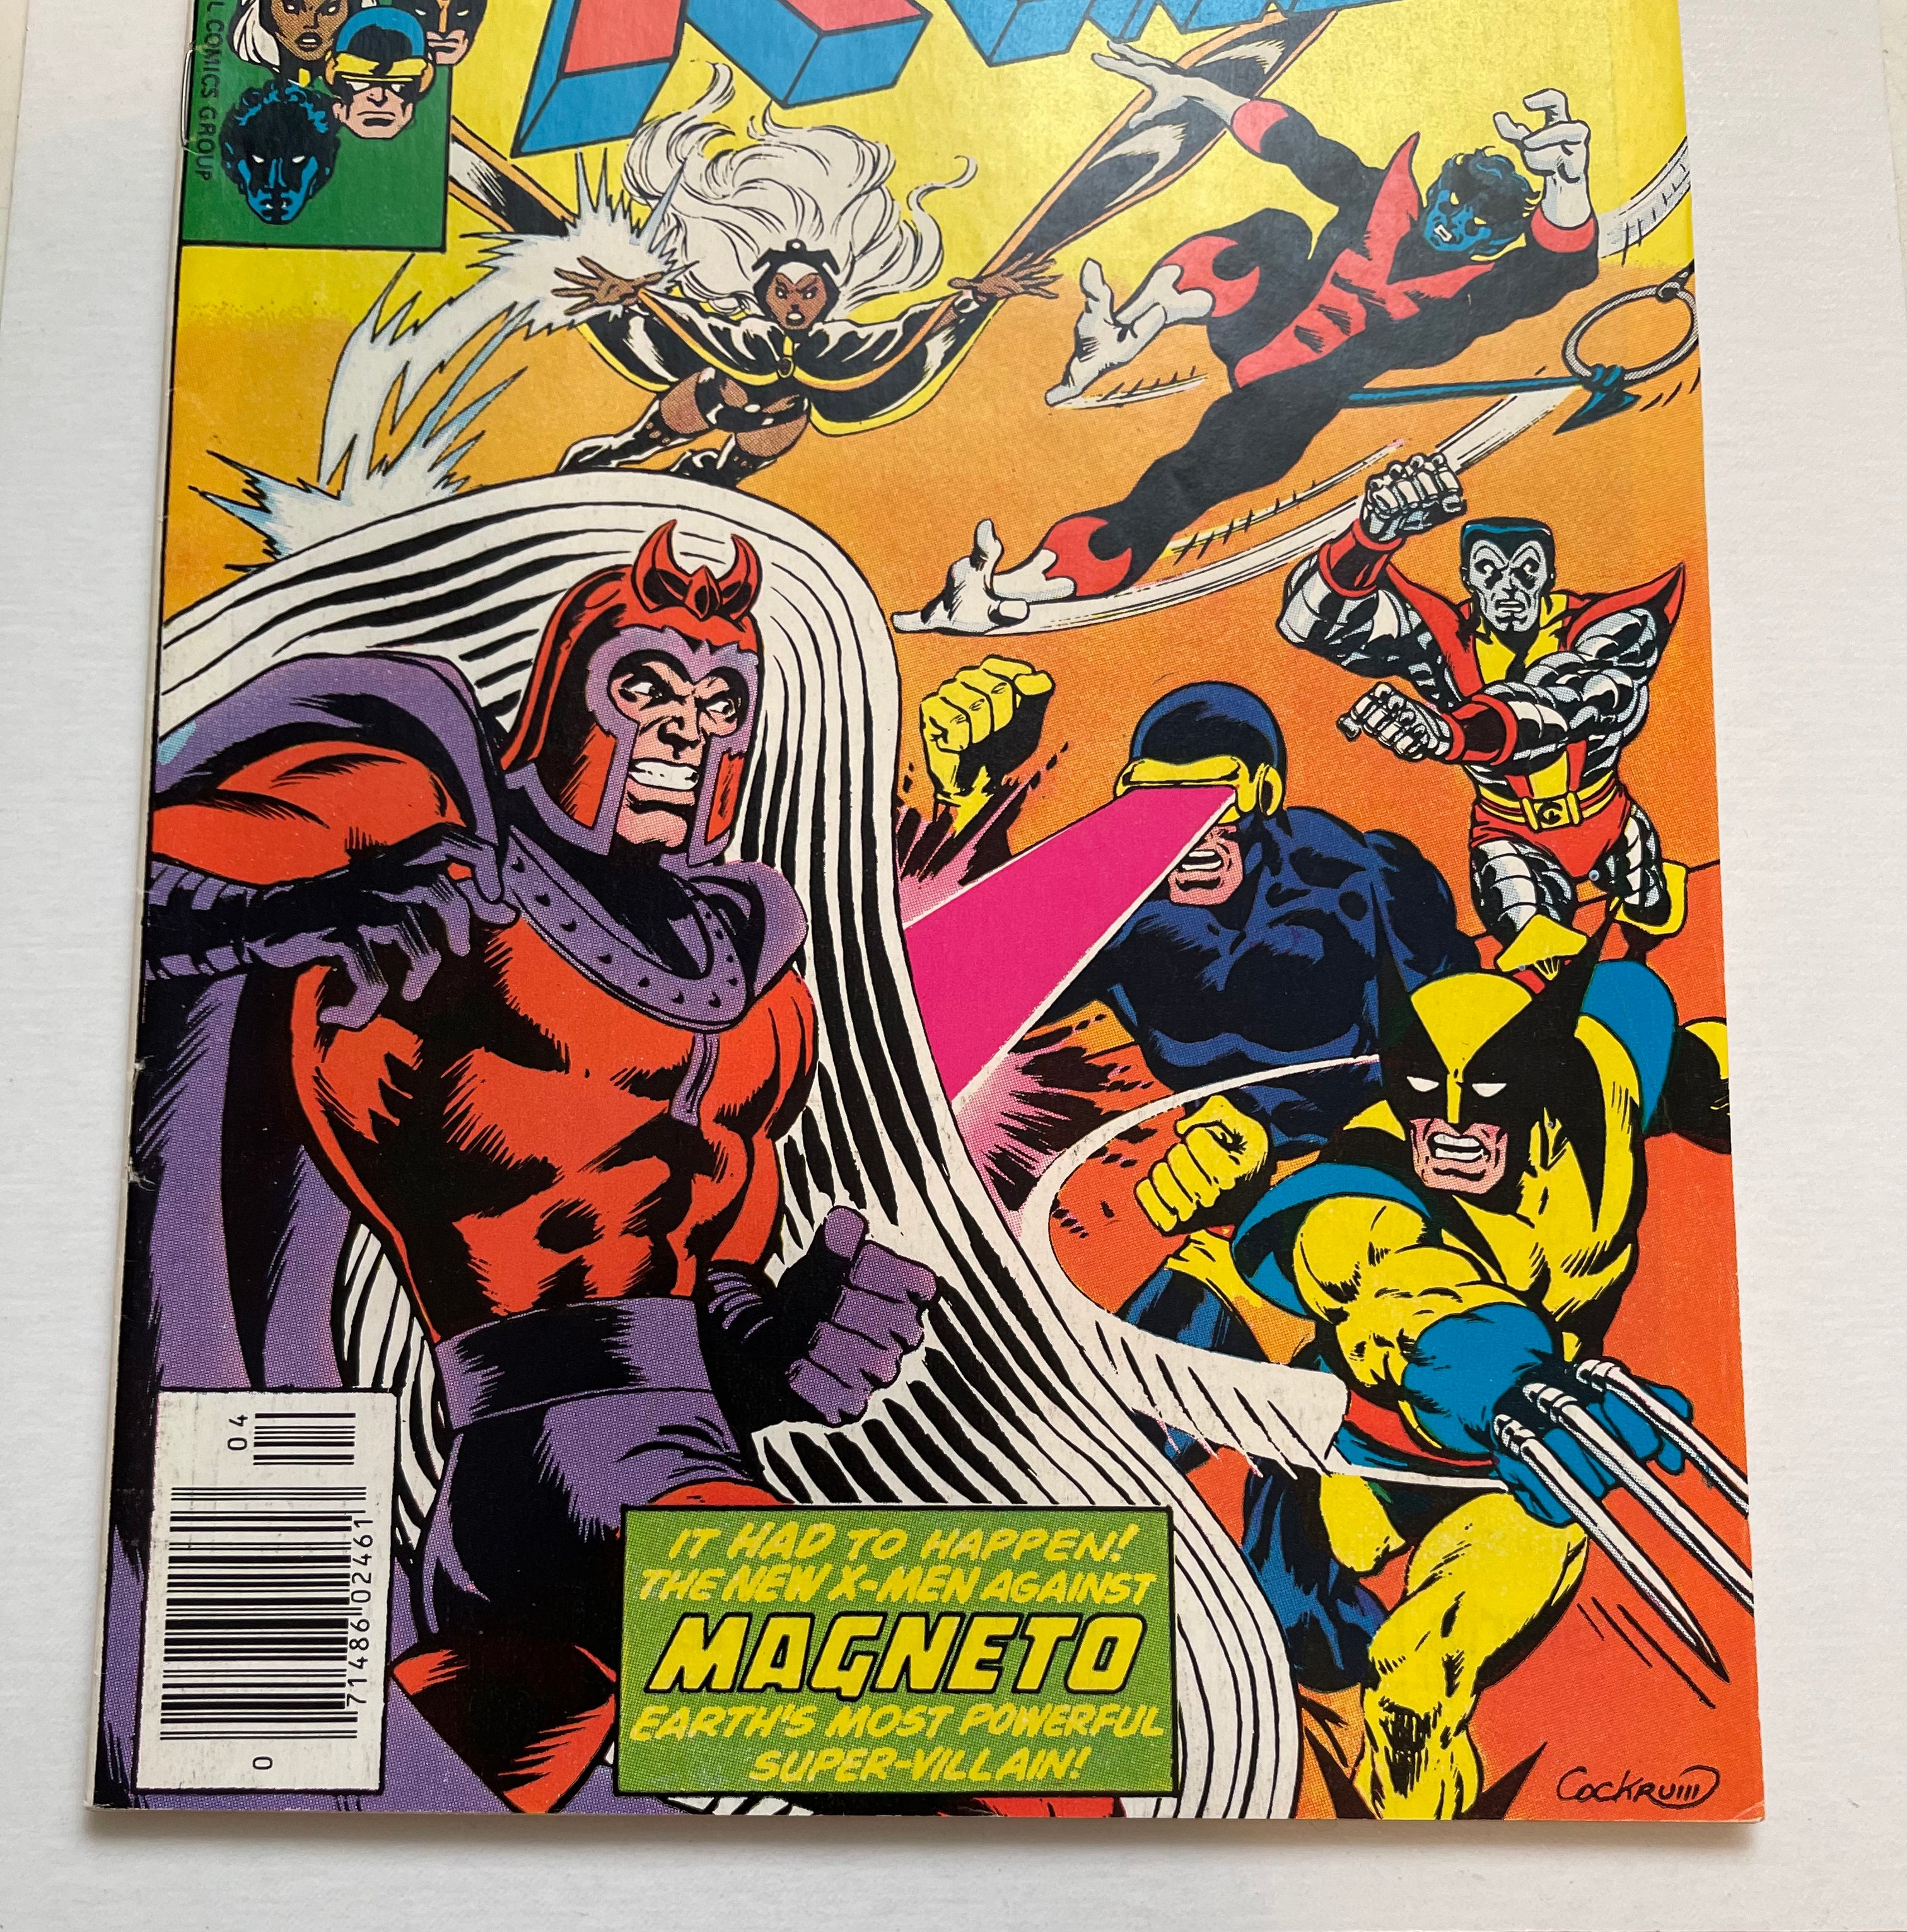 X-Men #104 Vf condition nice comic book